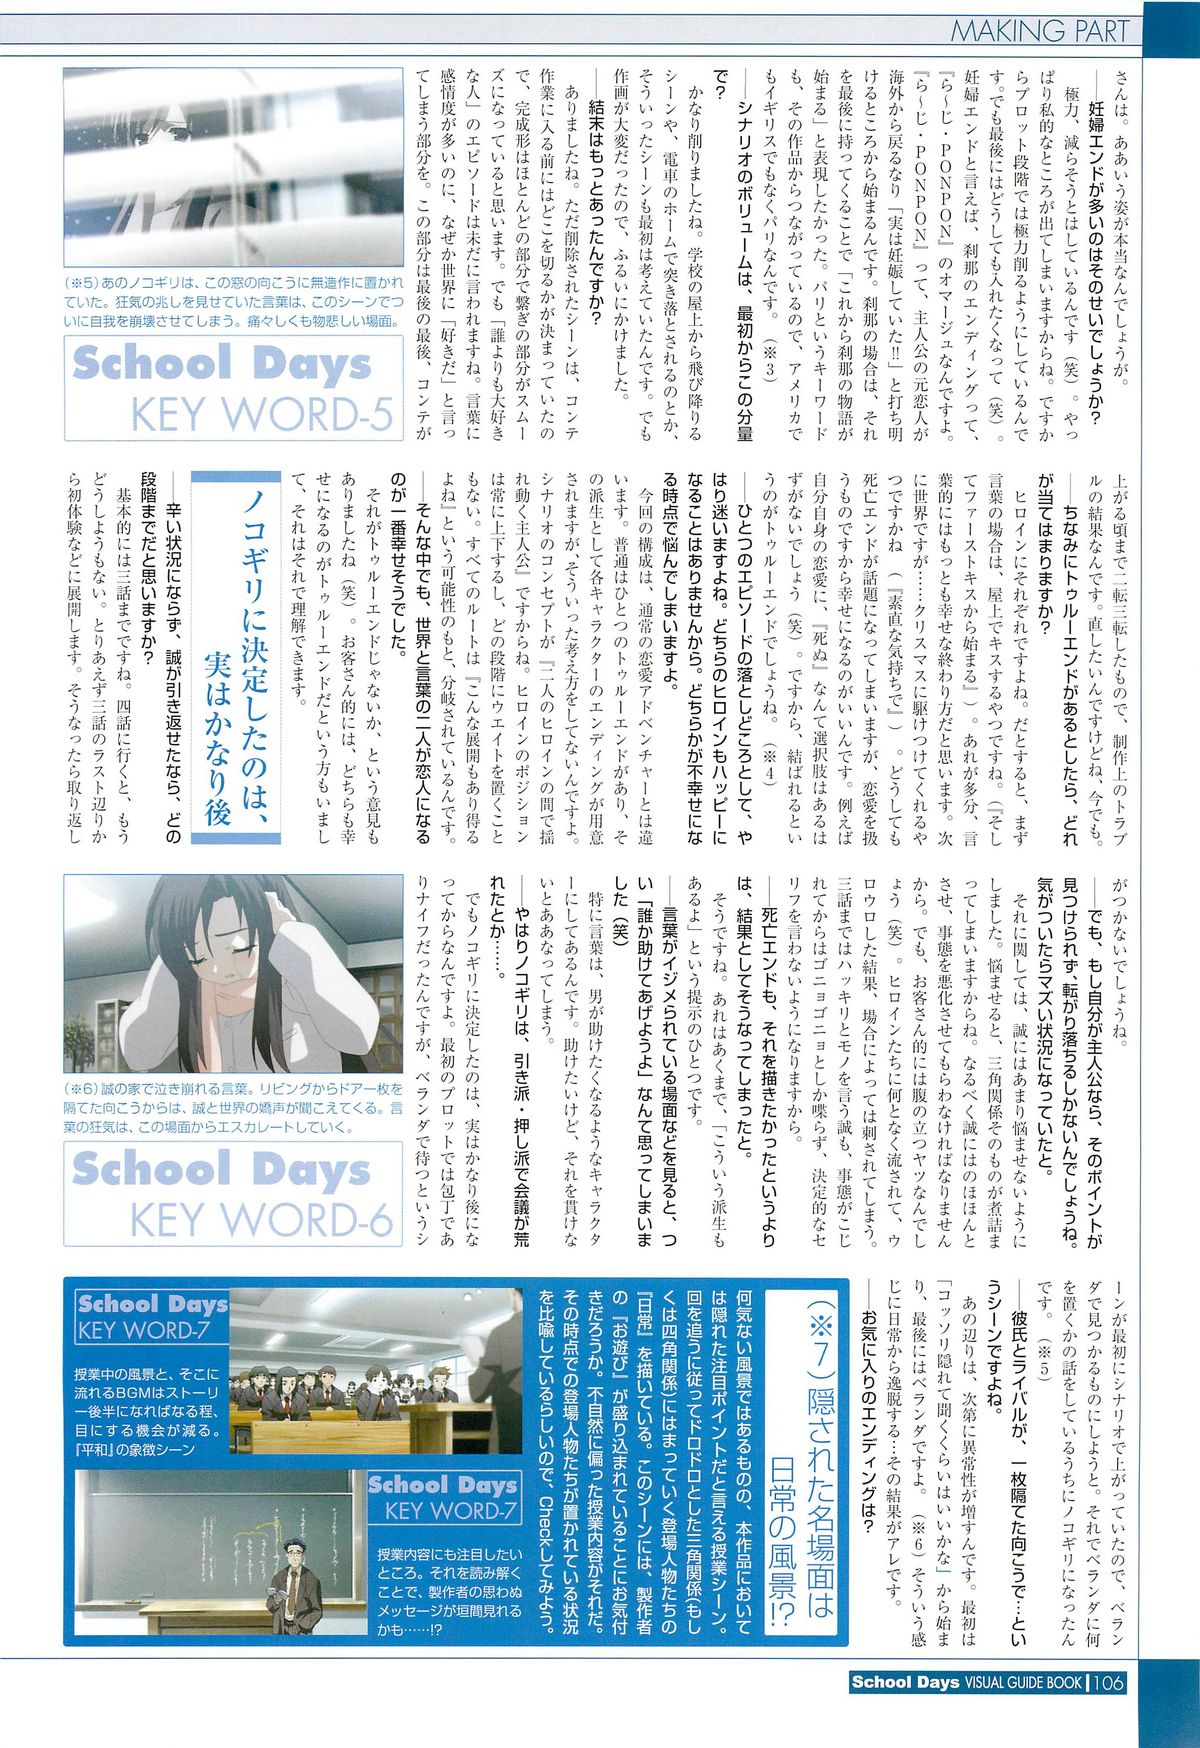 School Days ビジュアル・ガイドブック